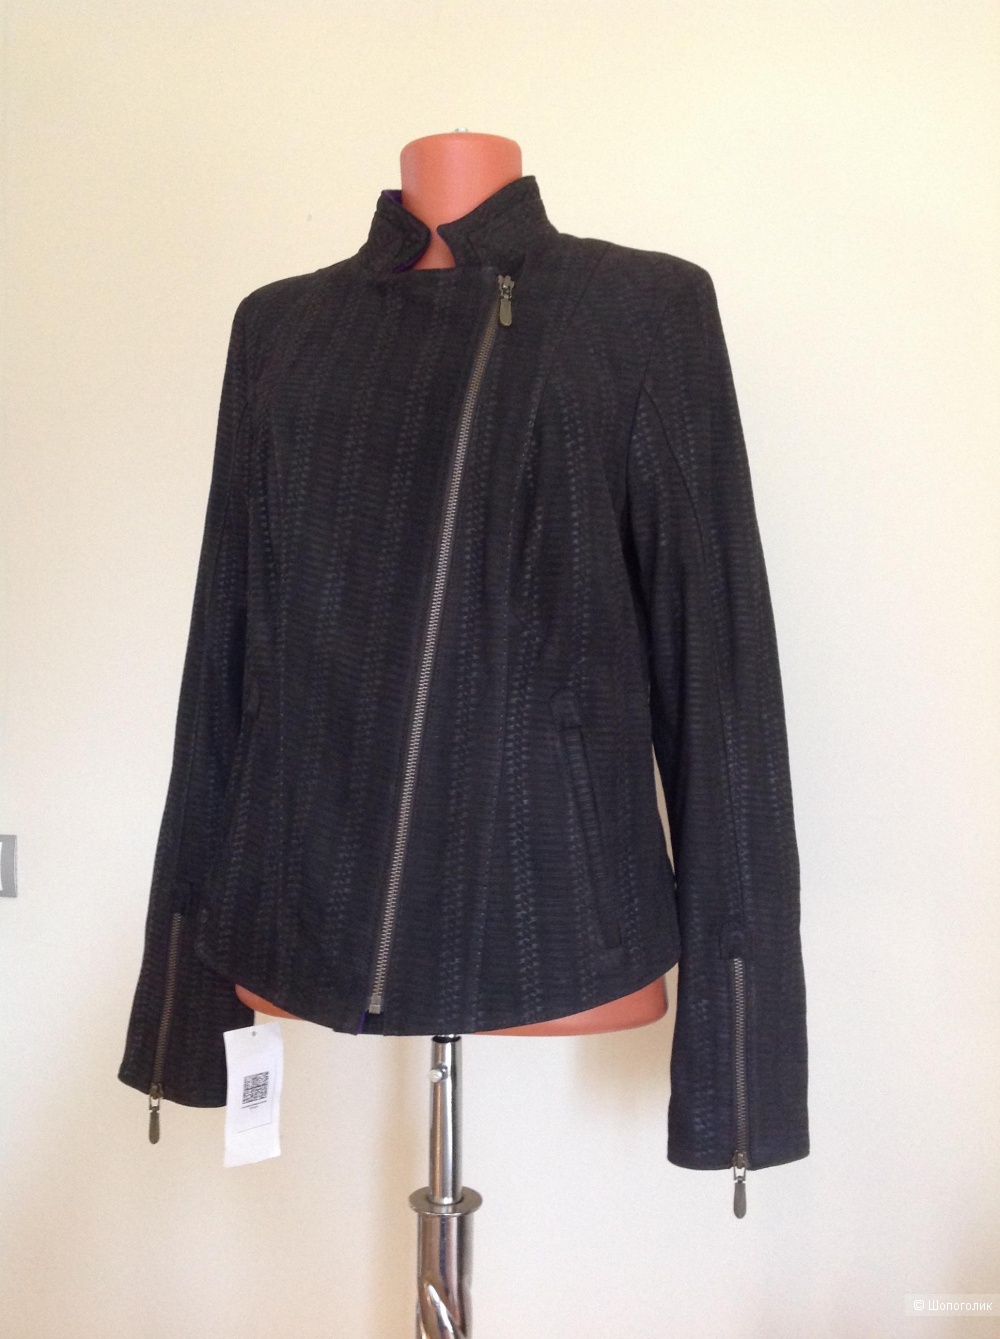 Кожаная куртка Marengo, размер 44 eur, на 44-46-48